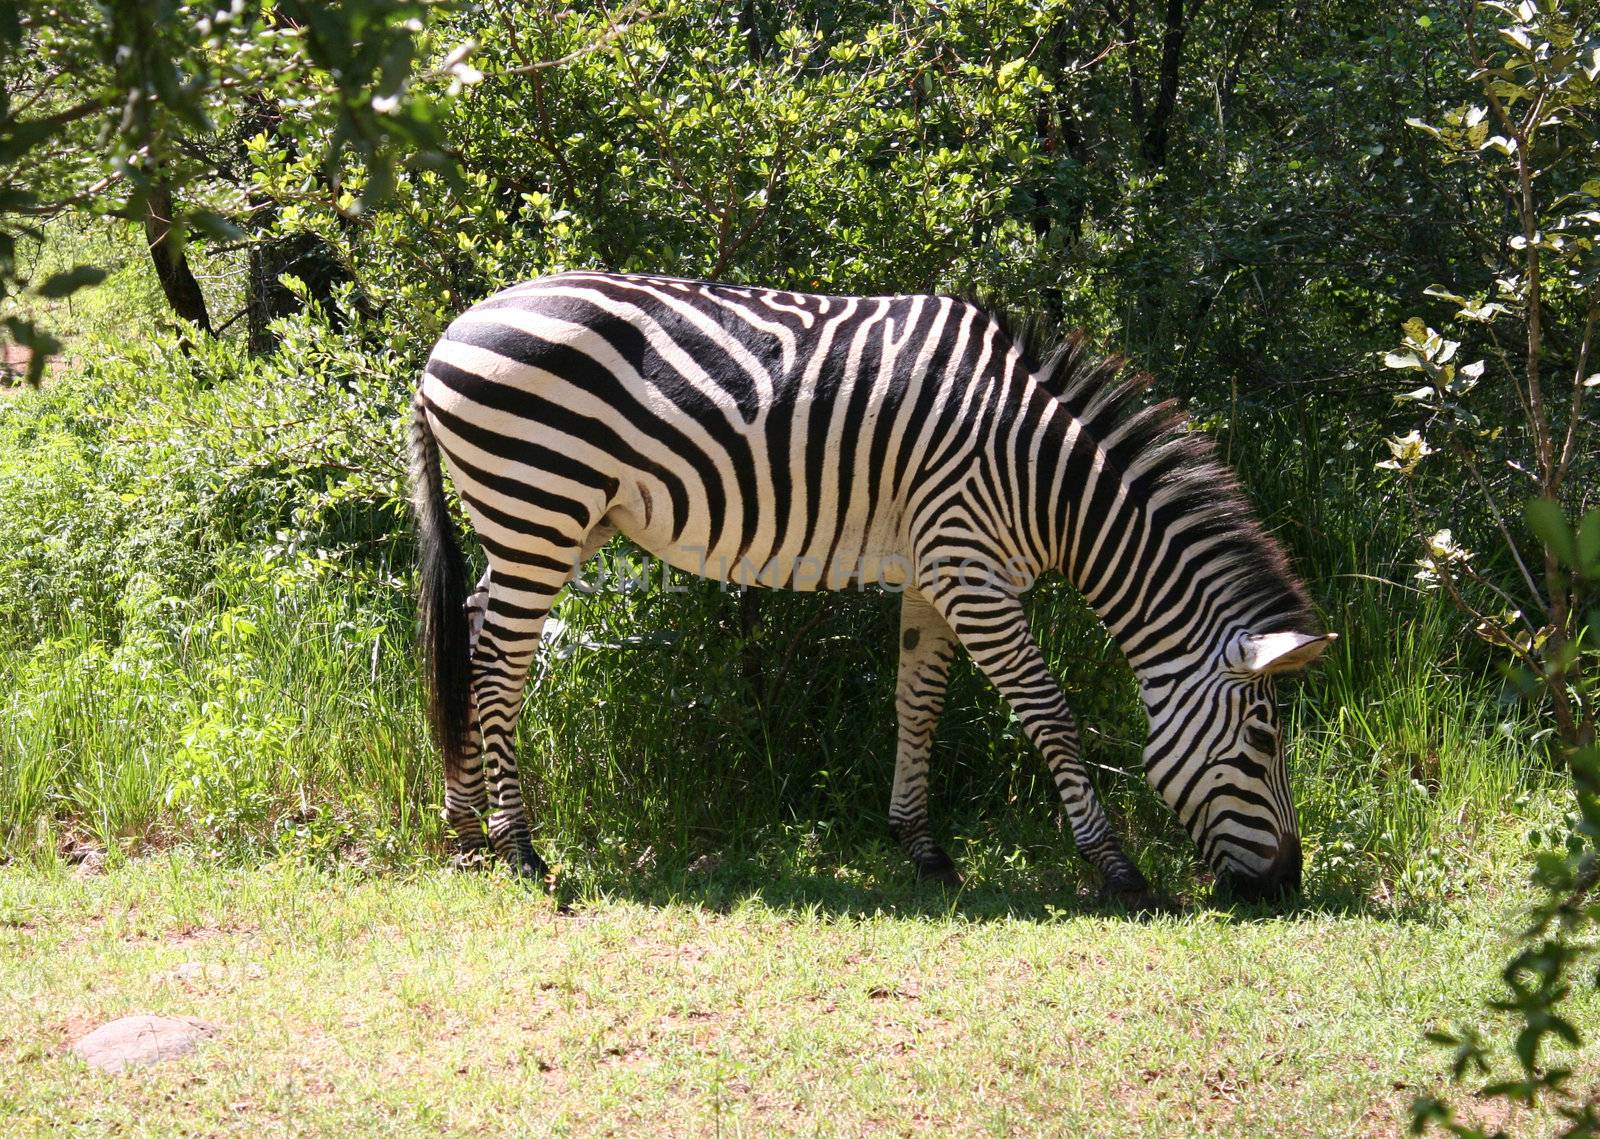  zebra in Africa by lsantilli